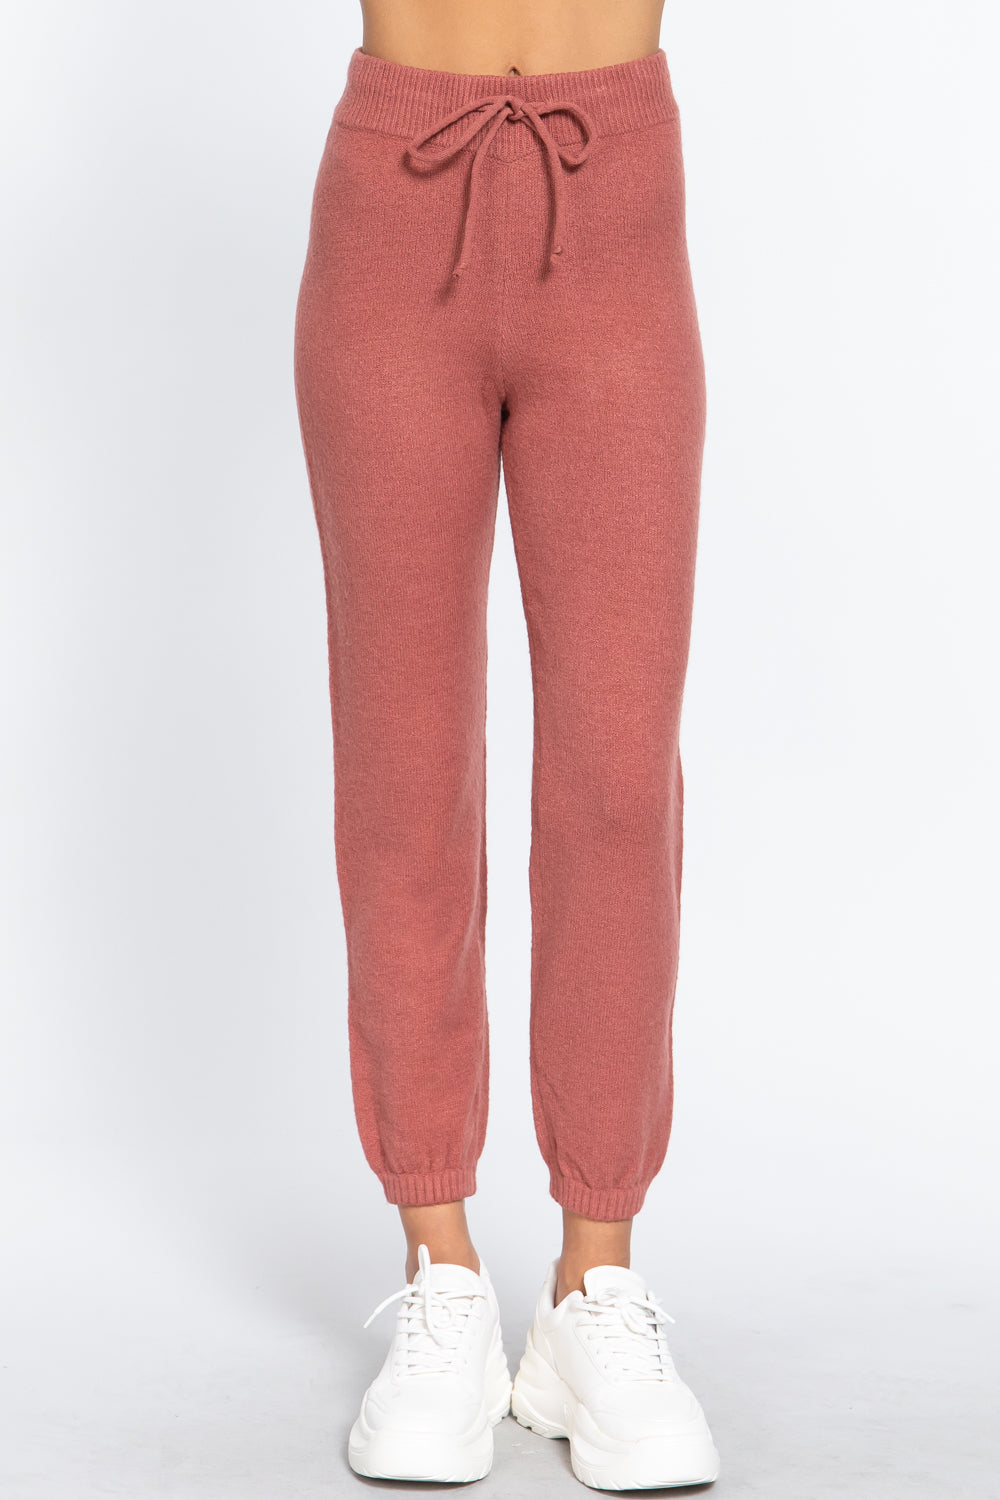 Drawstring Sweater Long Pants in Raspberry Pink